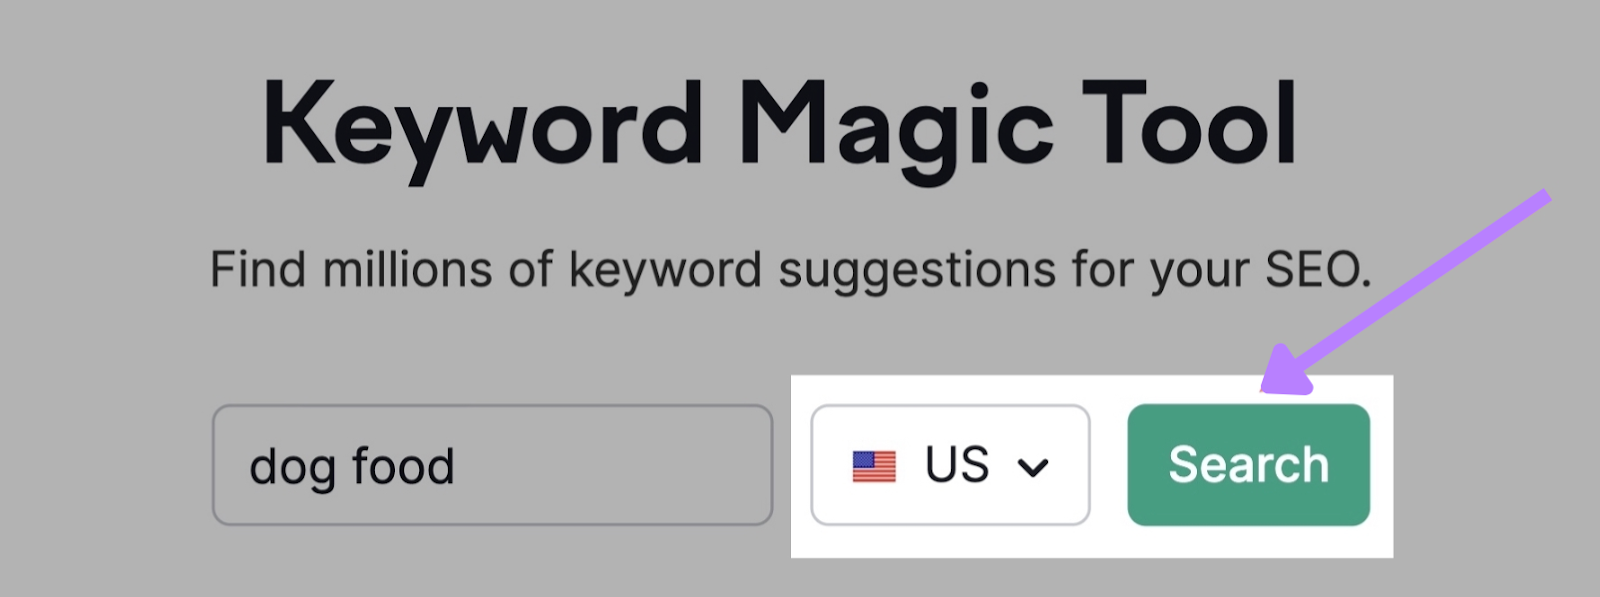 selecting the US in Keyword Magic tool